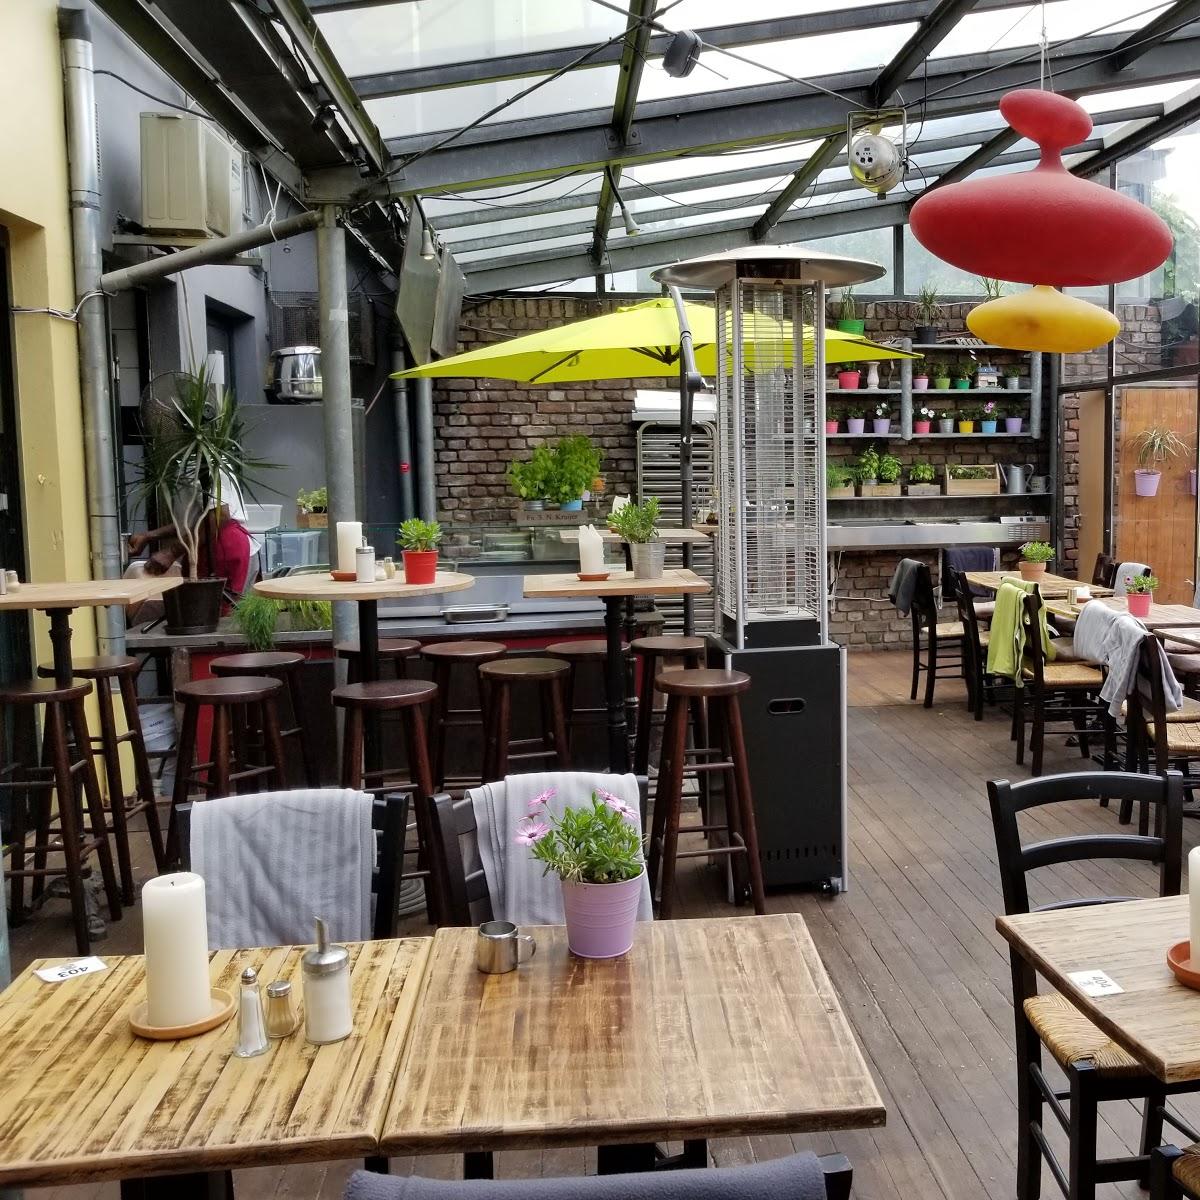 Restaurant "Rheinlust" in Bonn